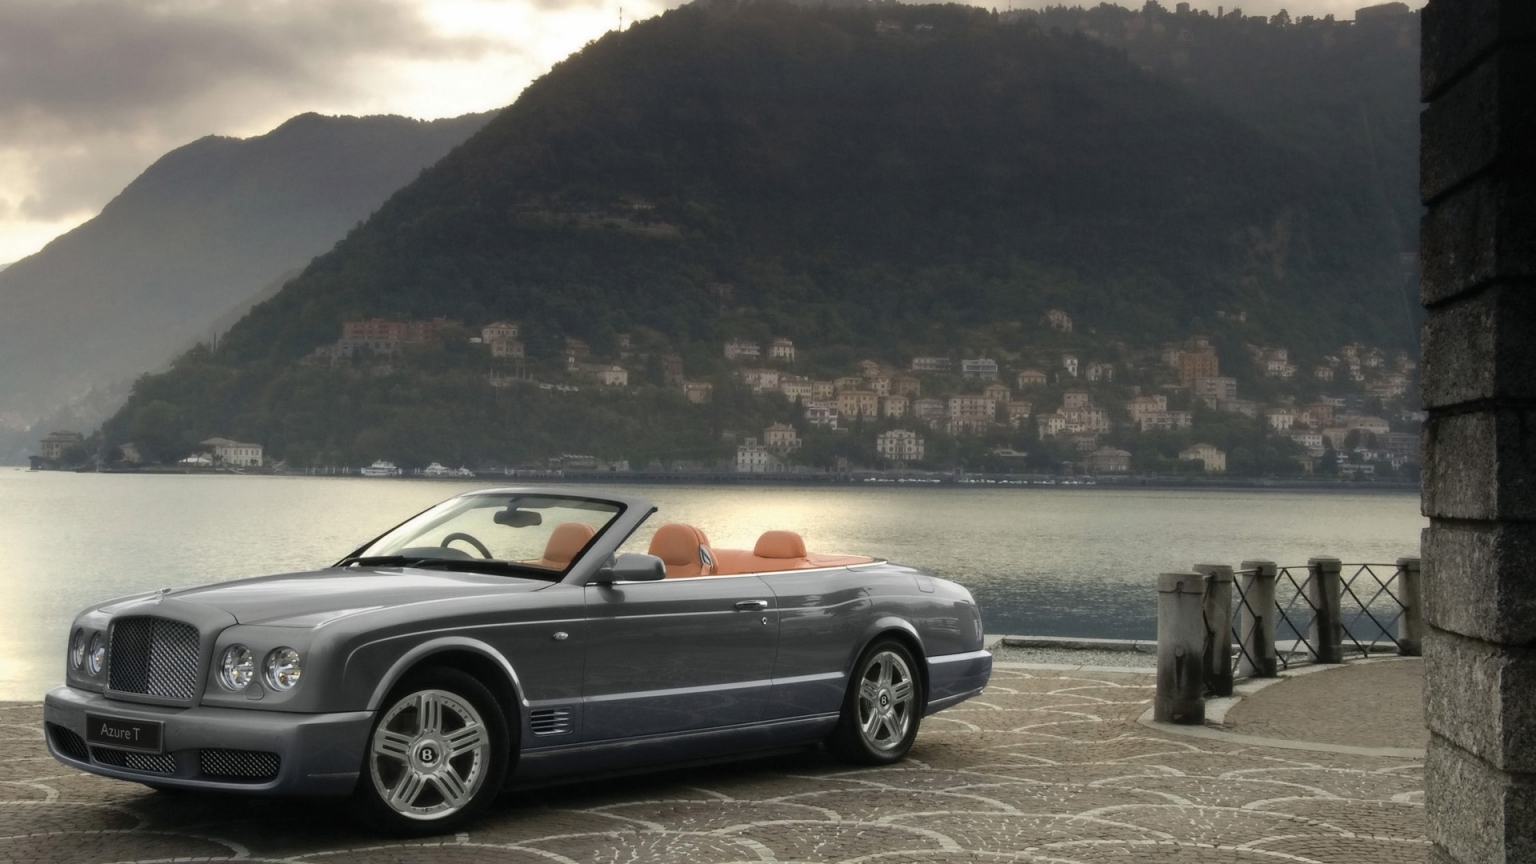 Bentley Azure T Venusian Grey 2009 for 1536 x 864 HDTV resolution